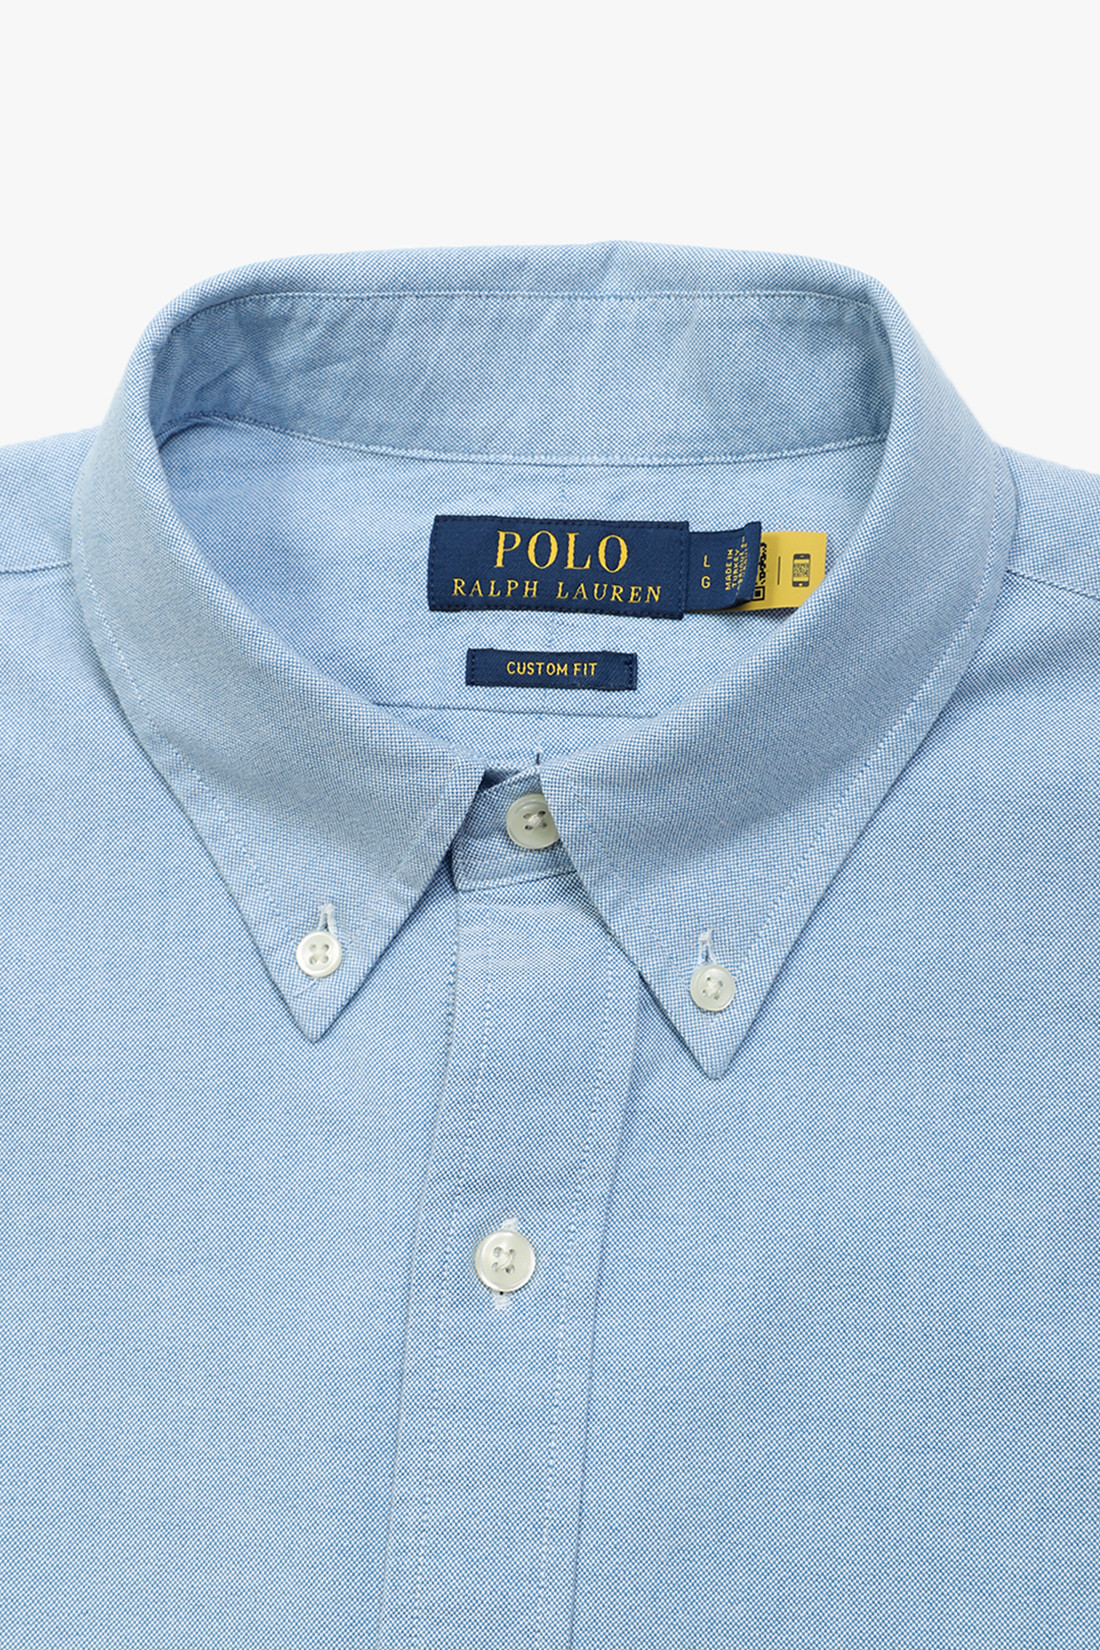 https://graduatestore.fr/131104-large_default/polo-ralph-lauren-custom-fit-oxford-shirt-blue.jpg